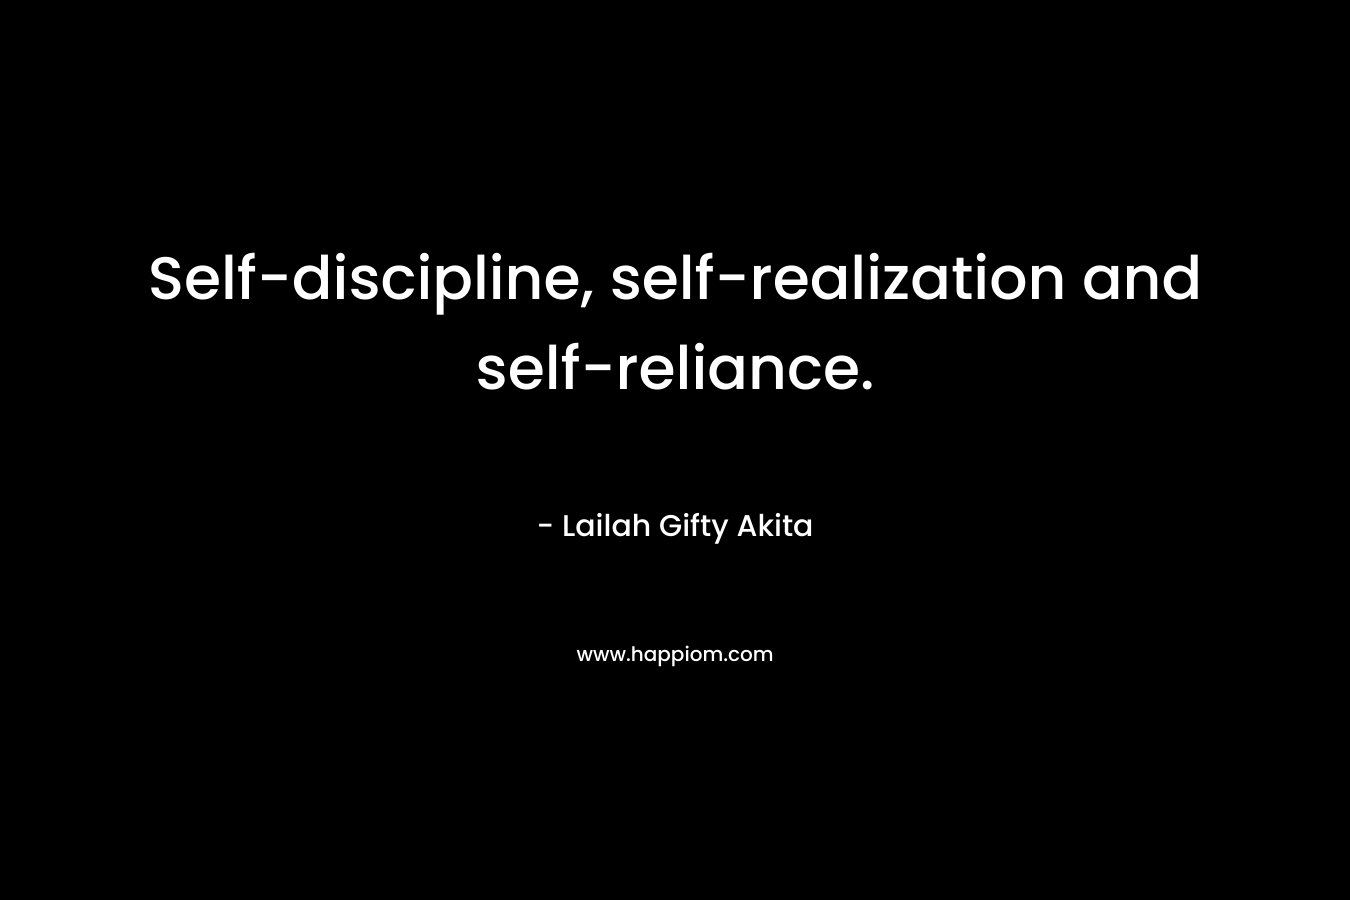 Self-discipline, self-realization and self-reliance.